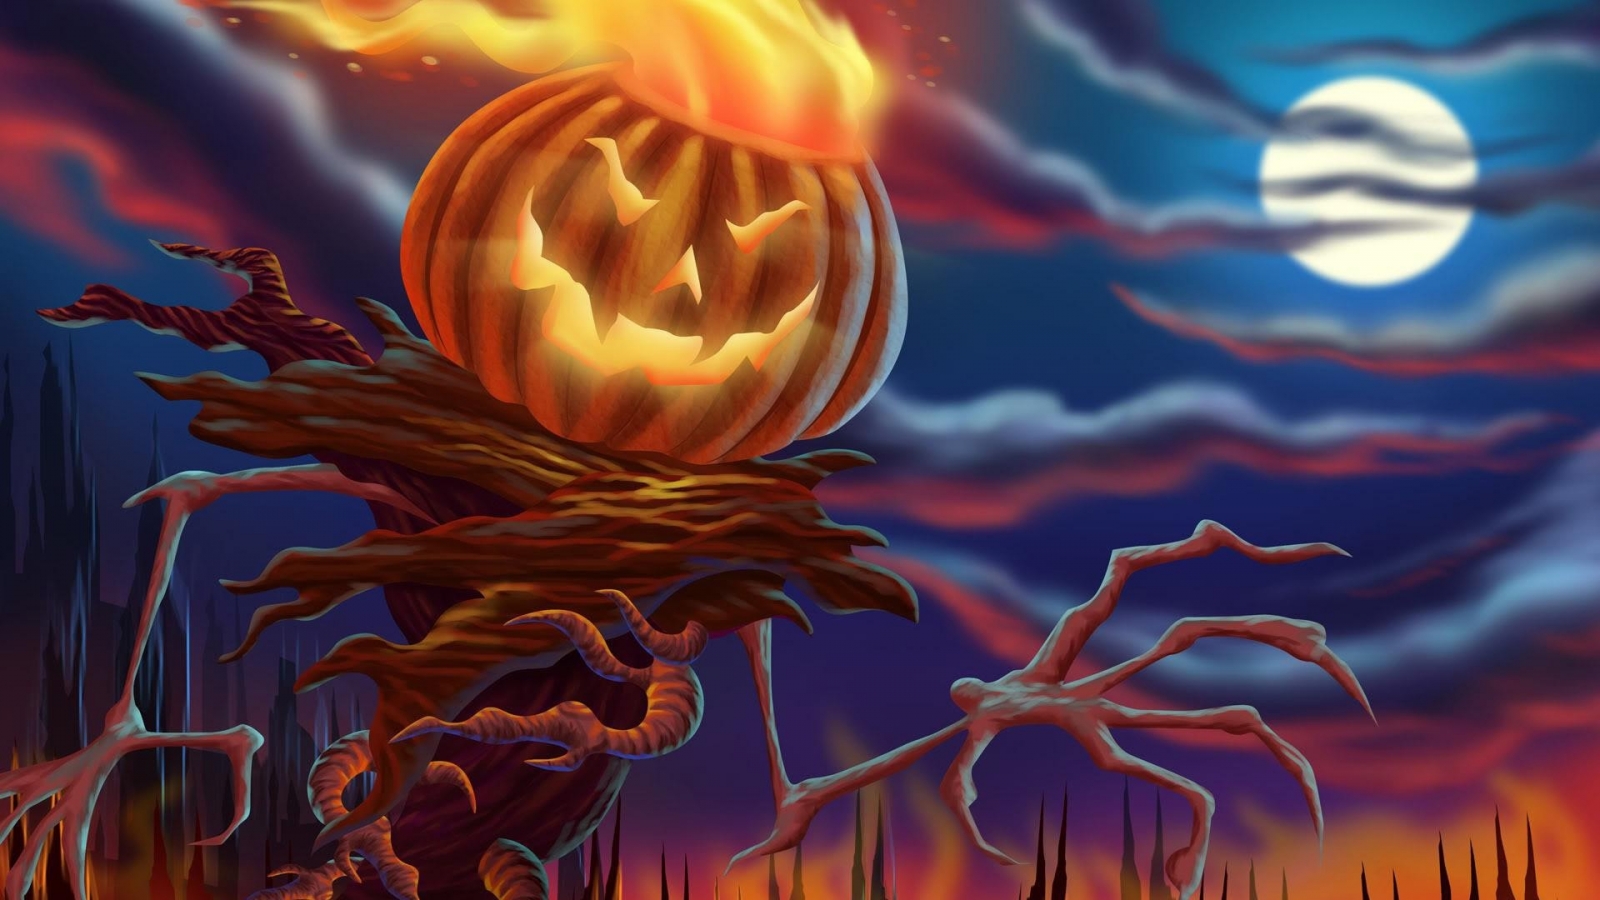 Halloween Digital Illustration for 1600 x 900 HDTV resolution